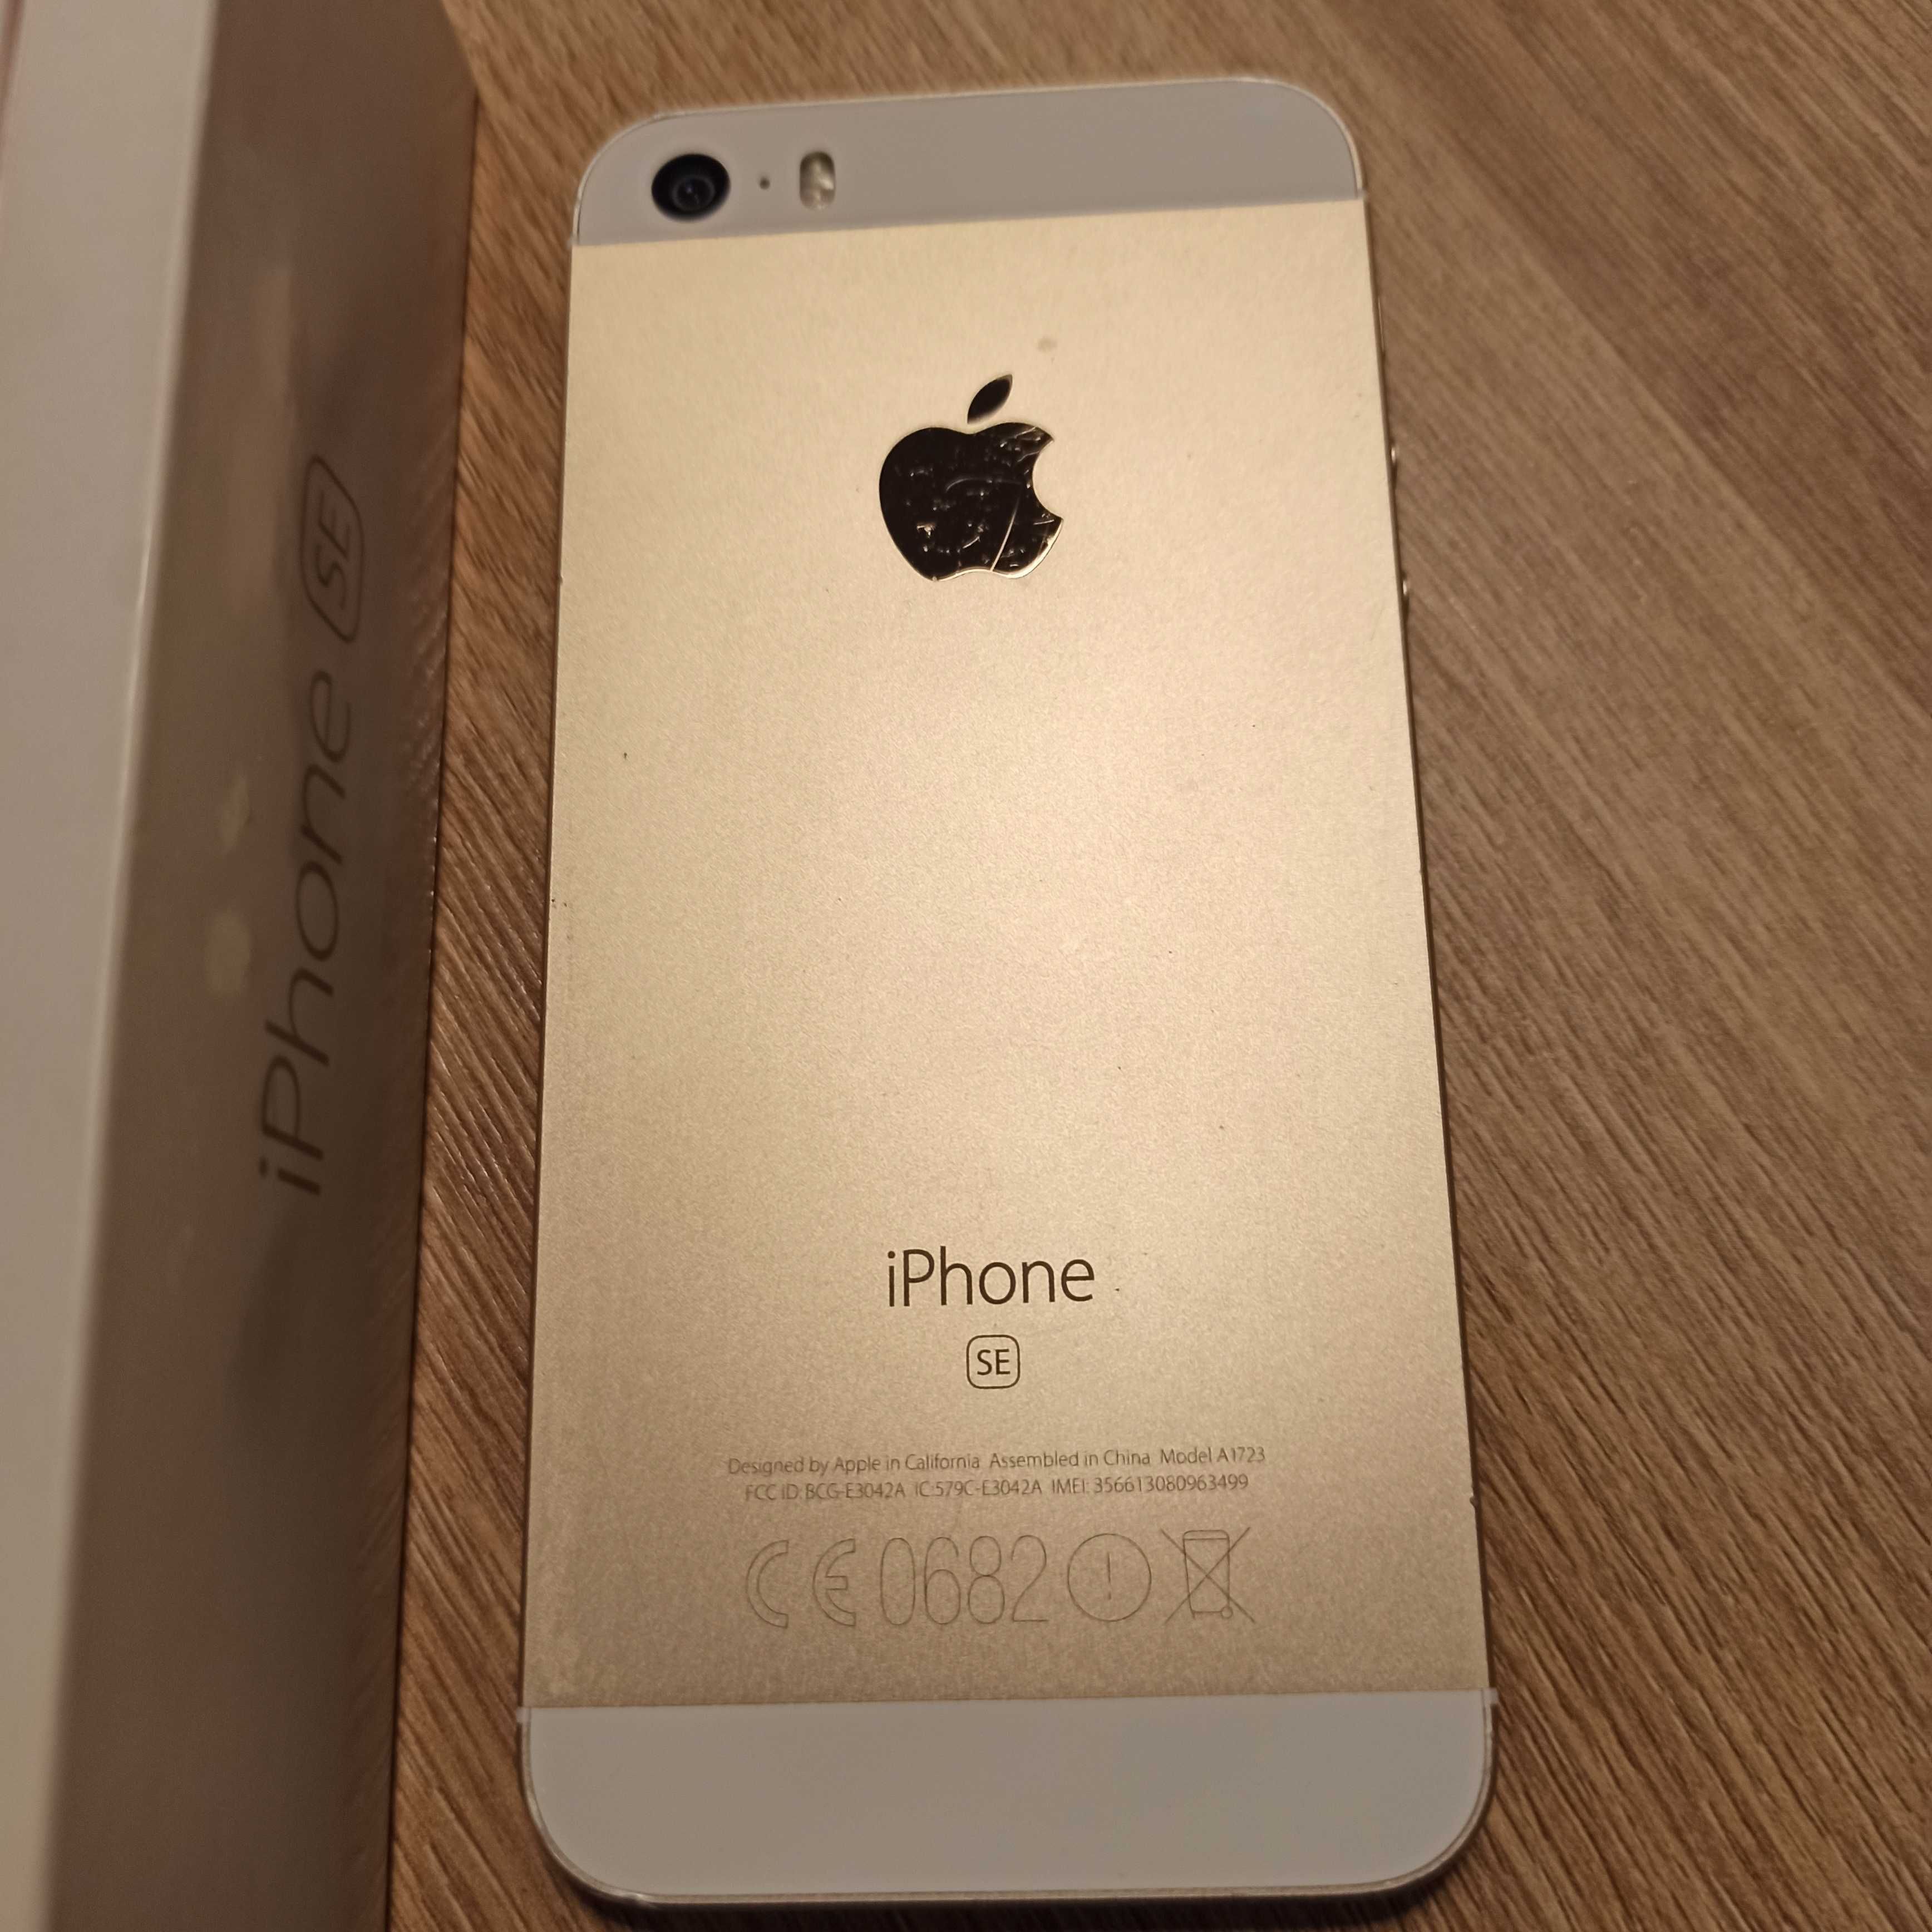 iPhone SE Gold 32GB